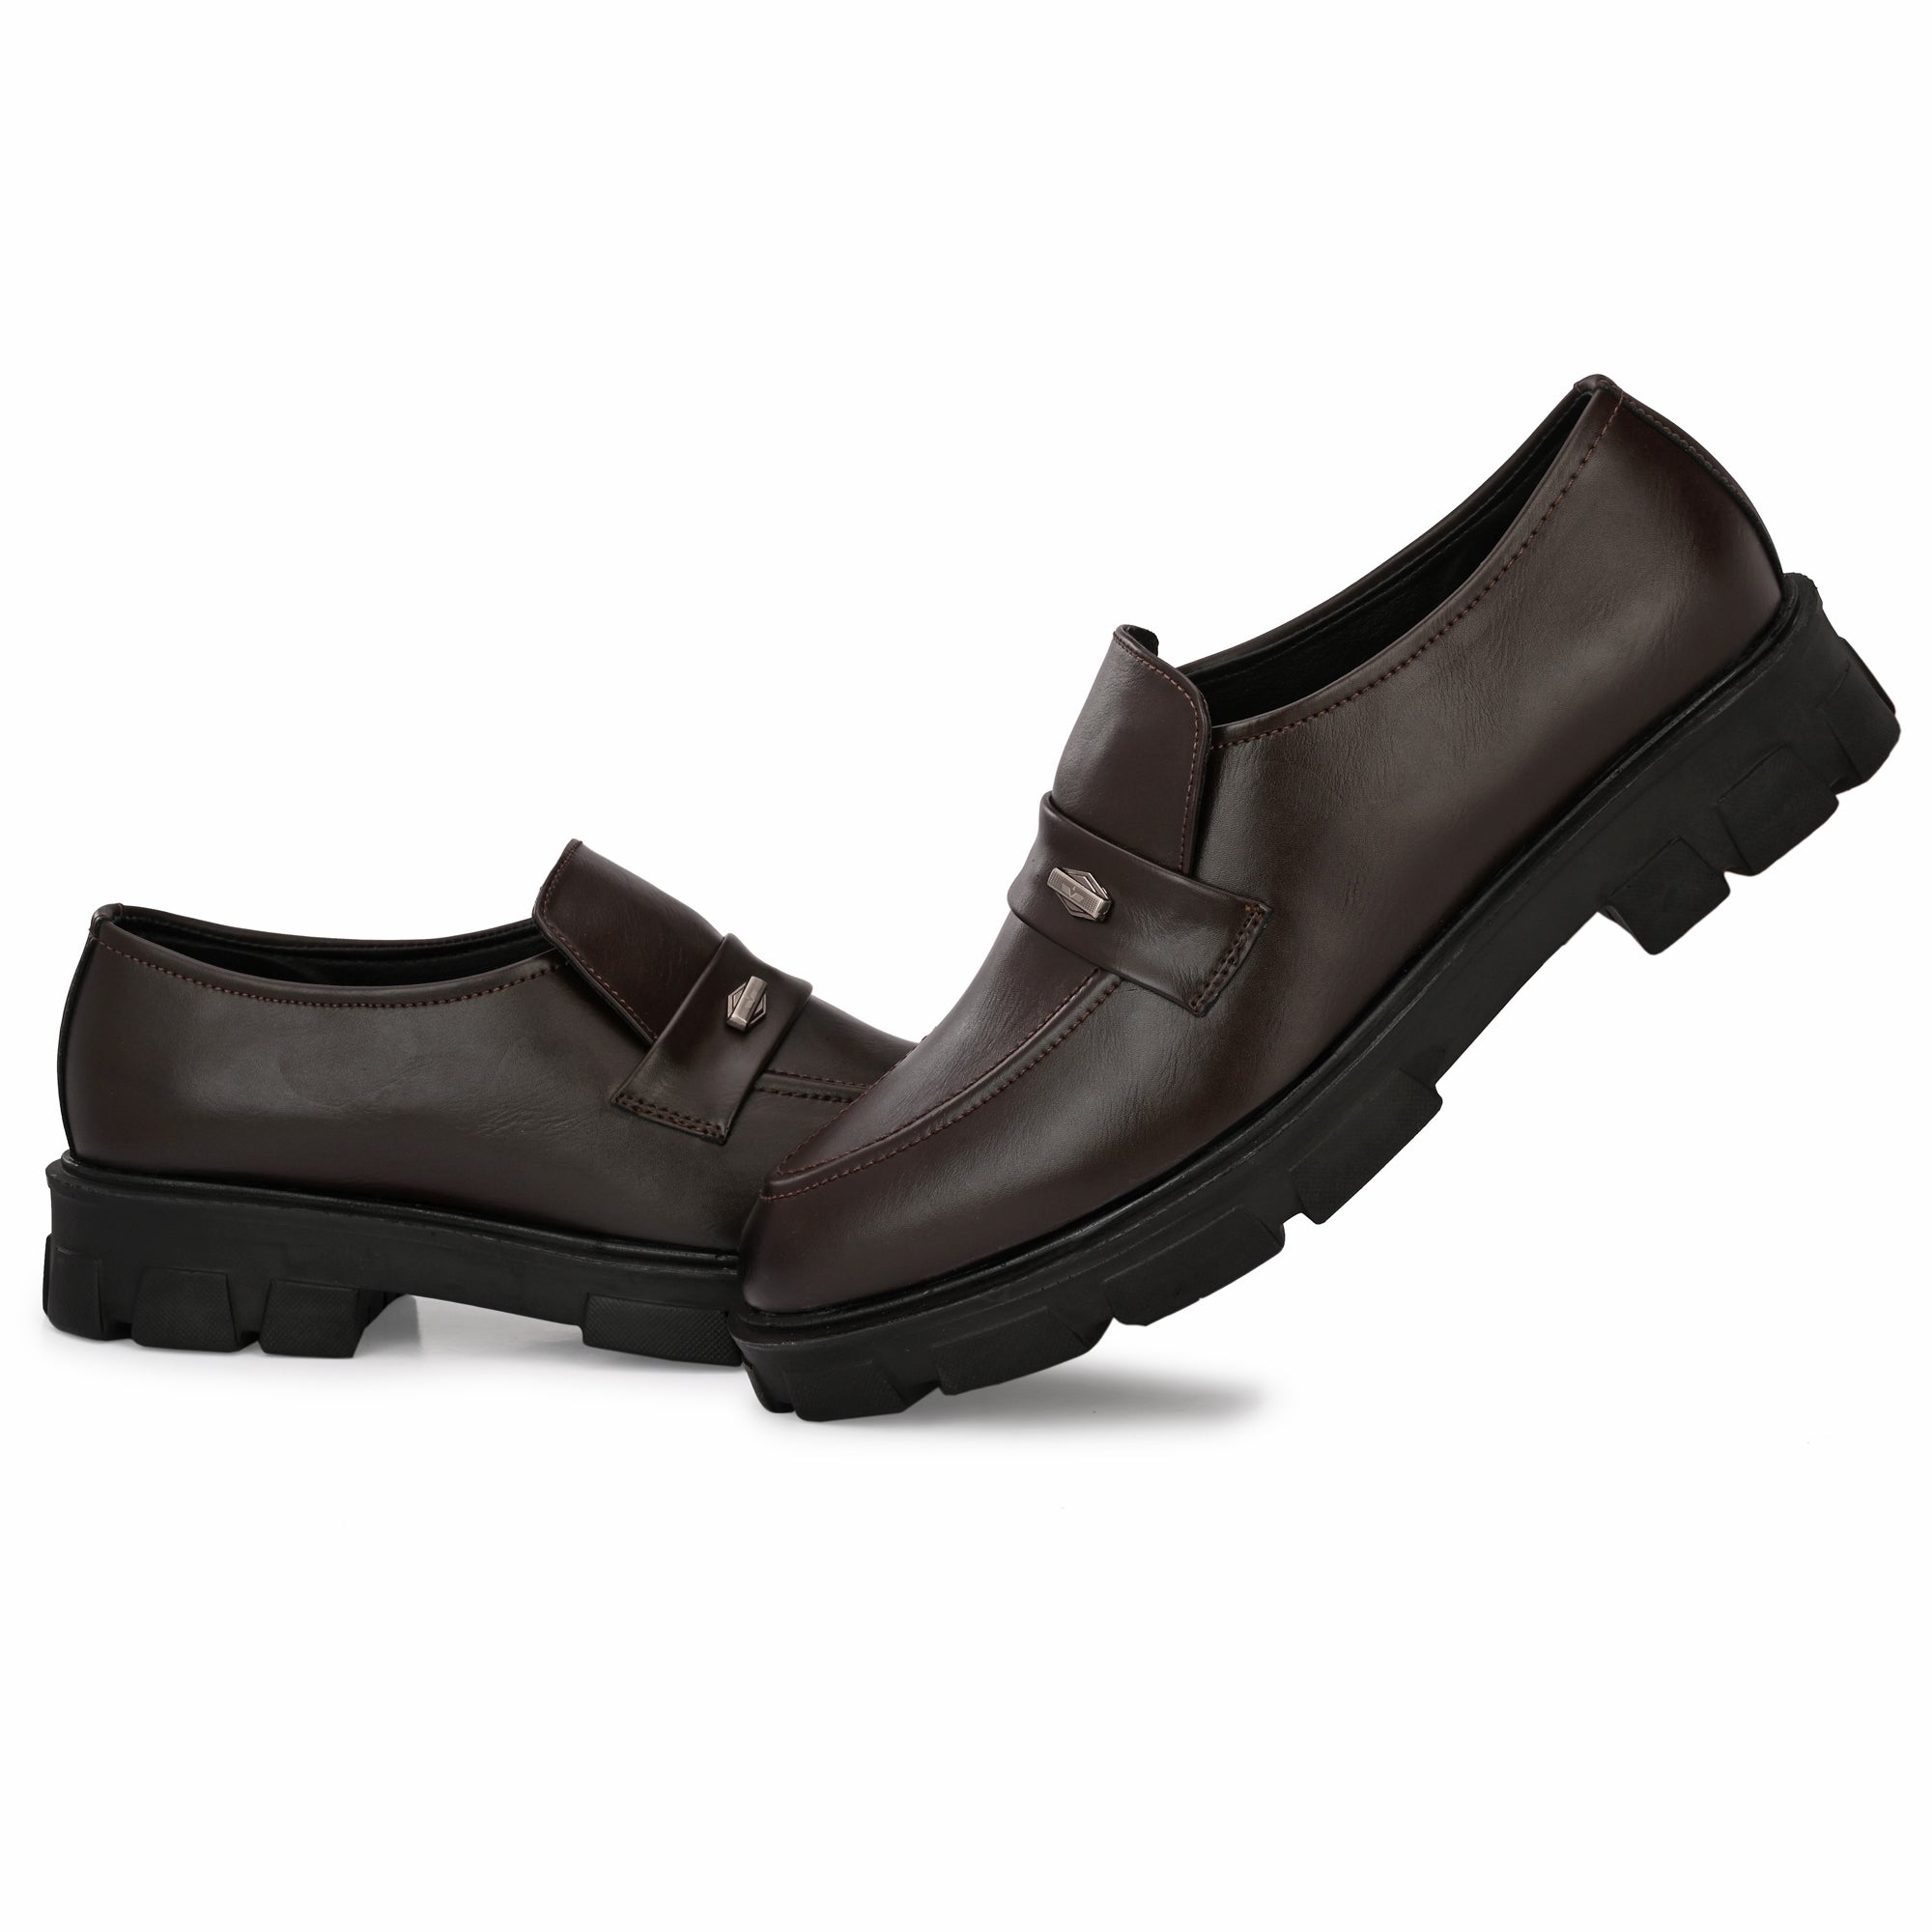 attitudist-coffee-brown-high-heel-slip-on-penny-loafer-shoes-for-men